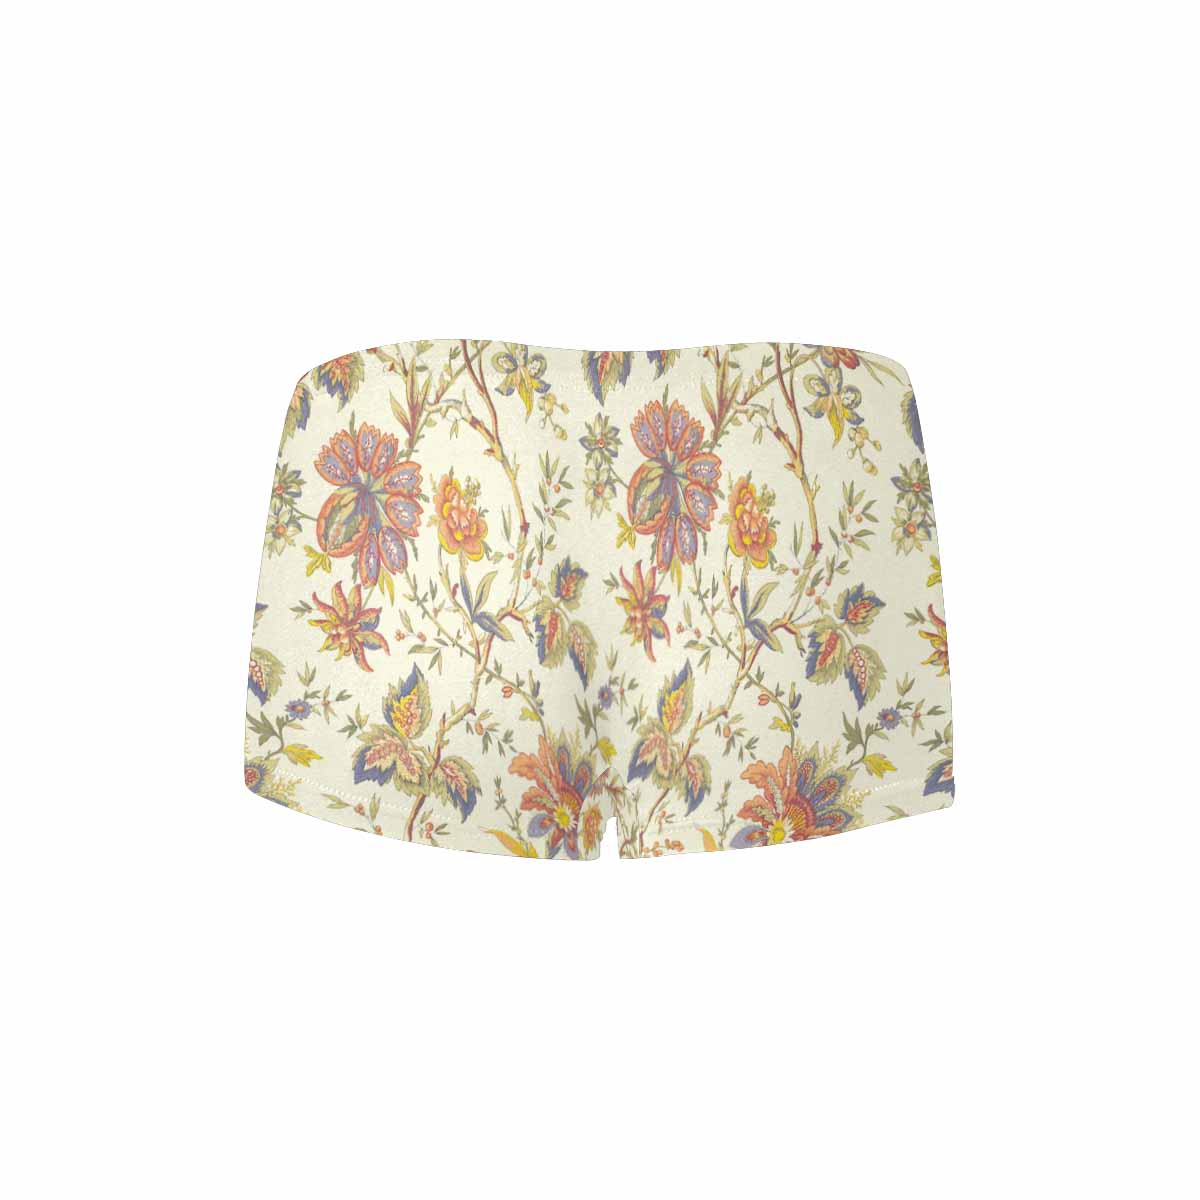 Floral 2, boyshorts, daisy dukes, pum pum shorts, panties, design 01